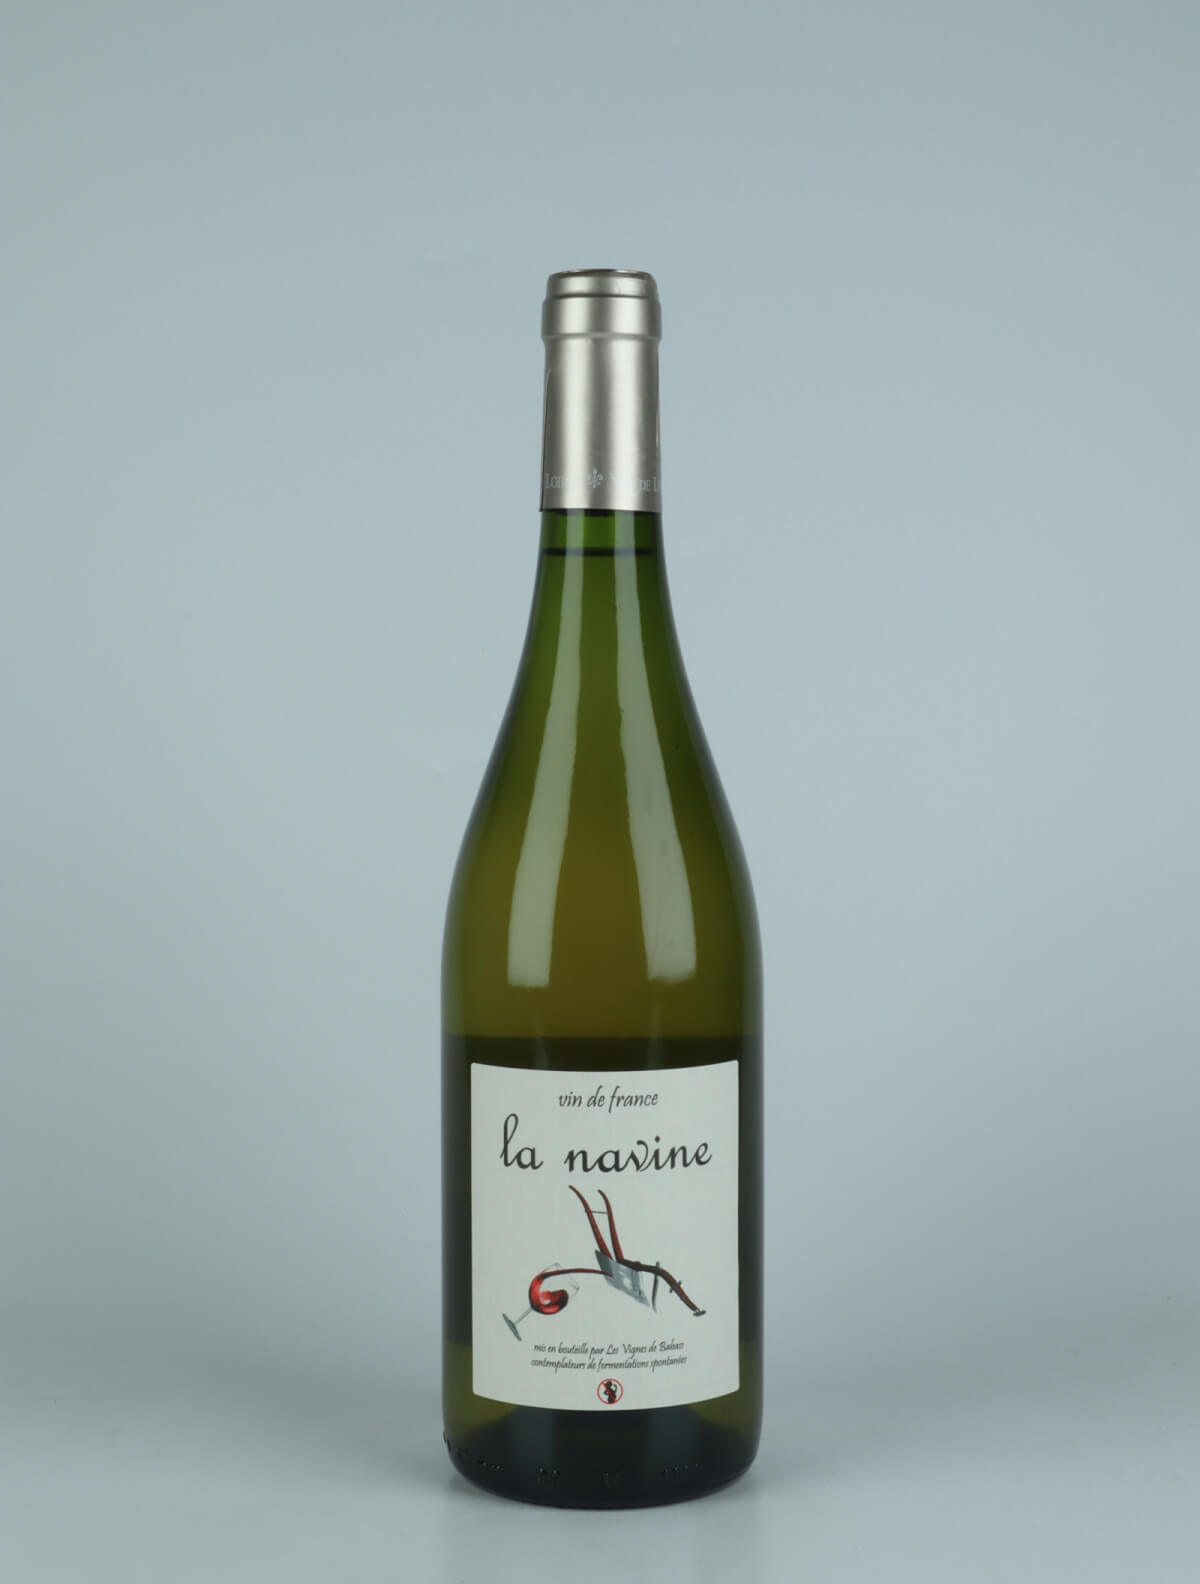 A bottle 2020 Navine White wine from Les Vignes de Babass, Loire in France